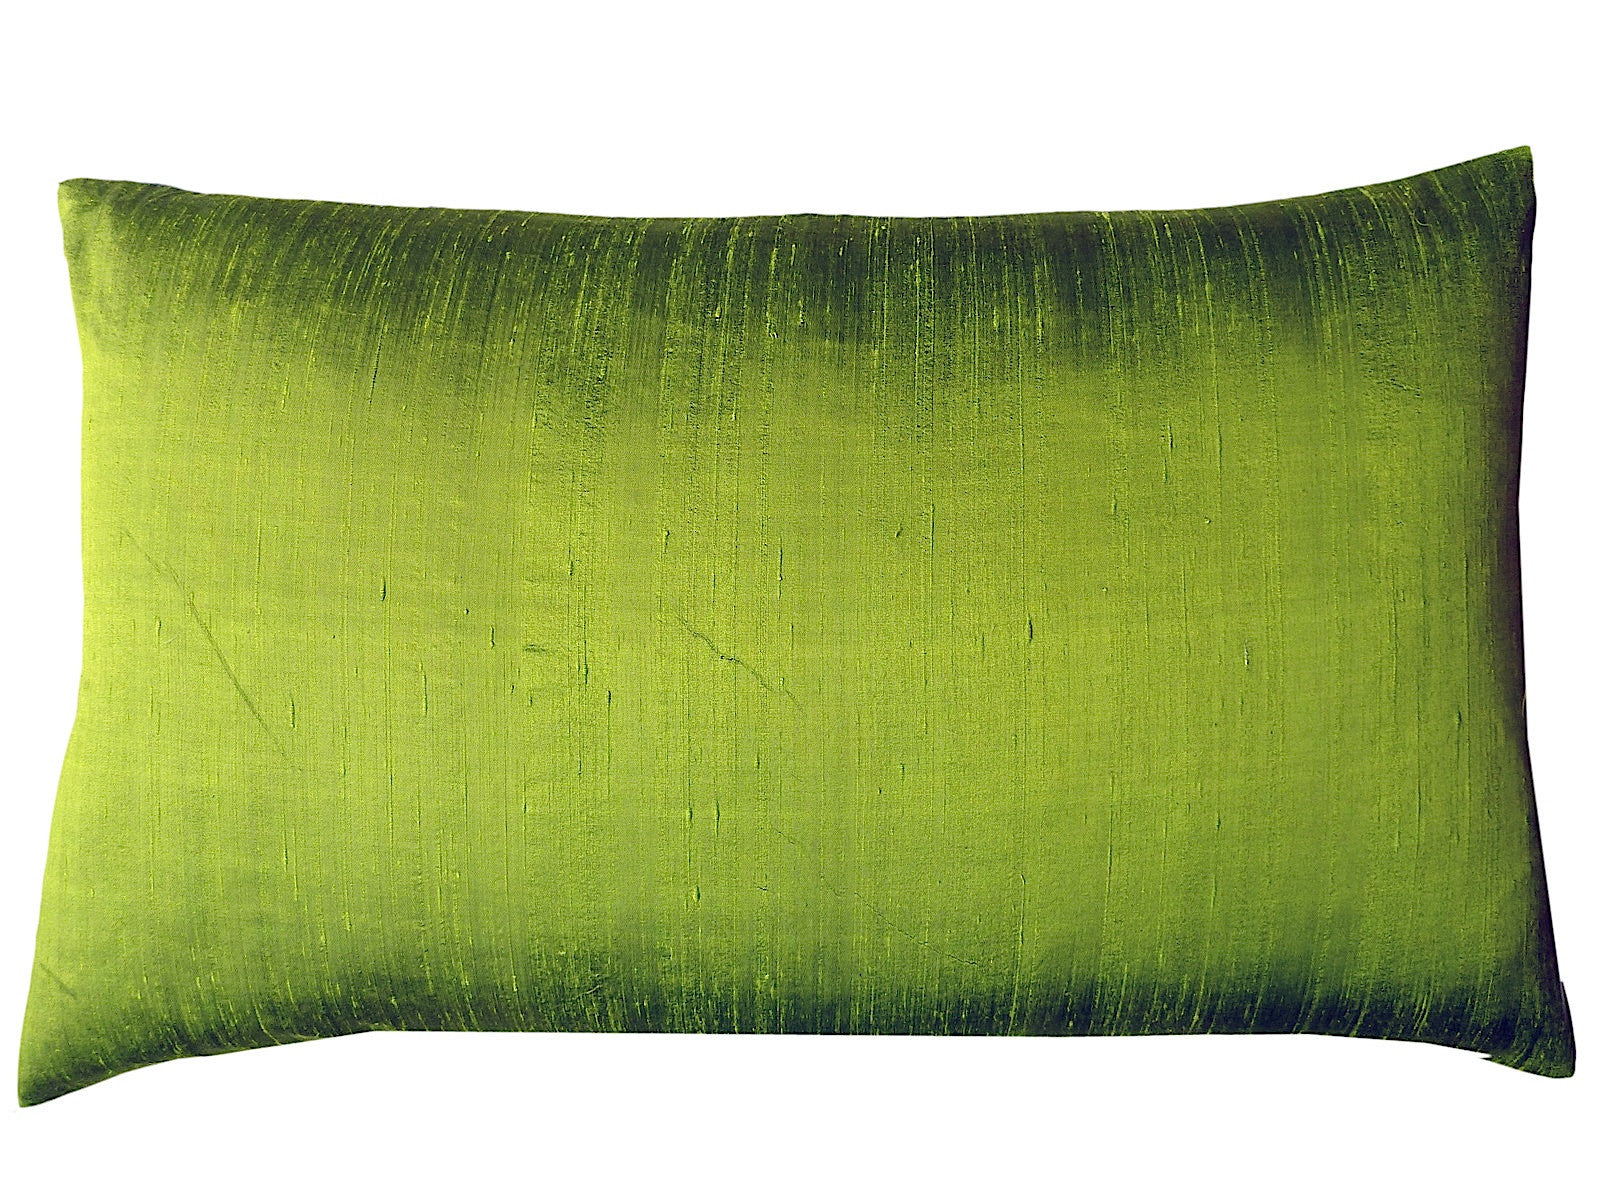 Thai Silk Modern Ikat King Size Pillows Sold As Pair Chartreuse Purple